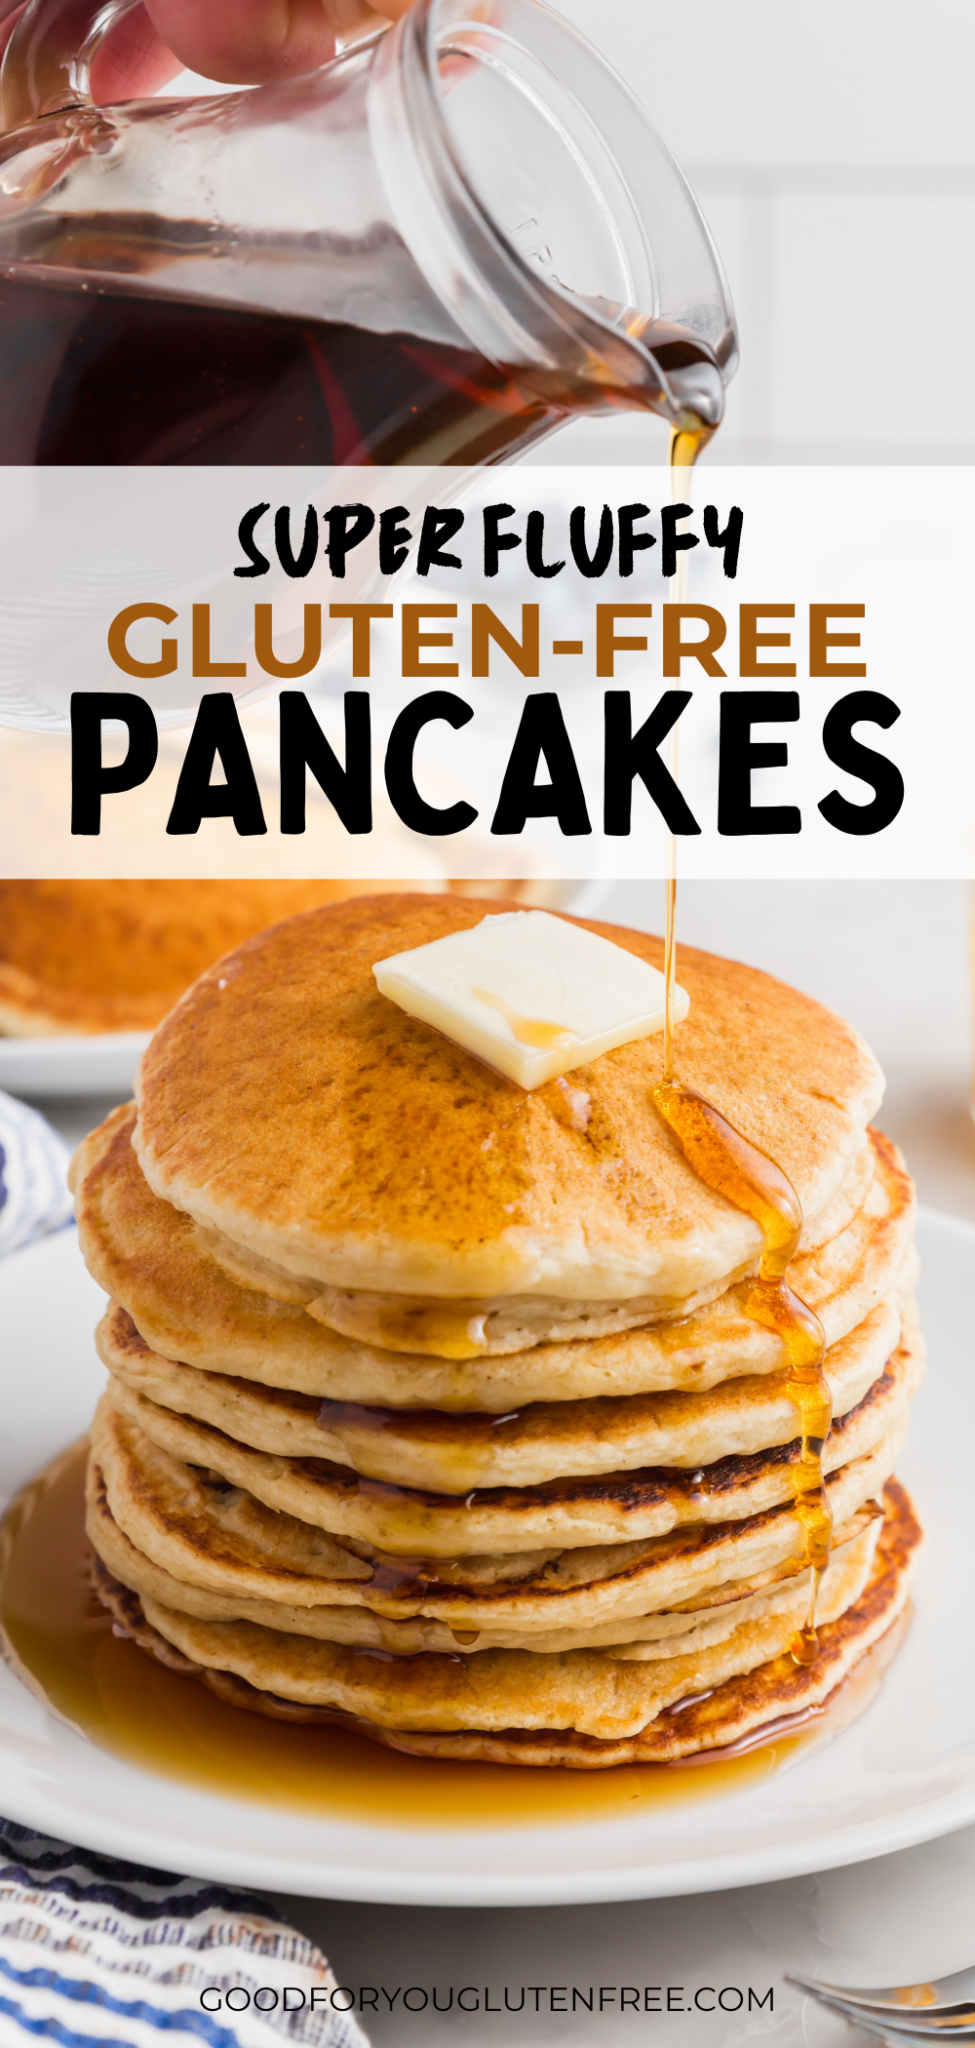 No-Fail Gluten-Free Pancake Recipe + Tips for Extra Fluffy Pancakes